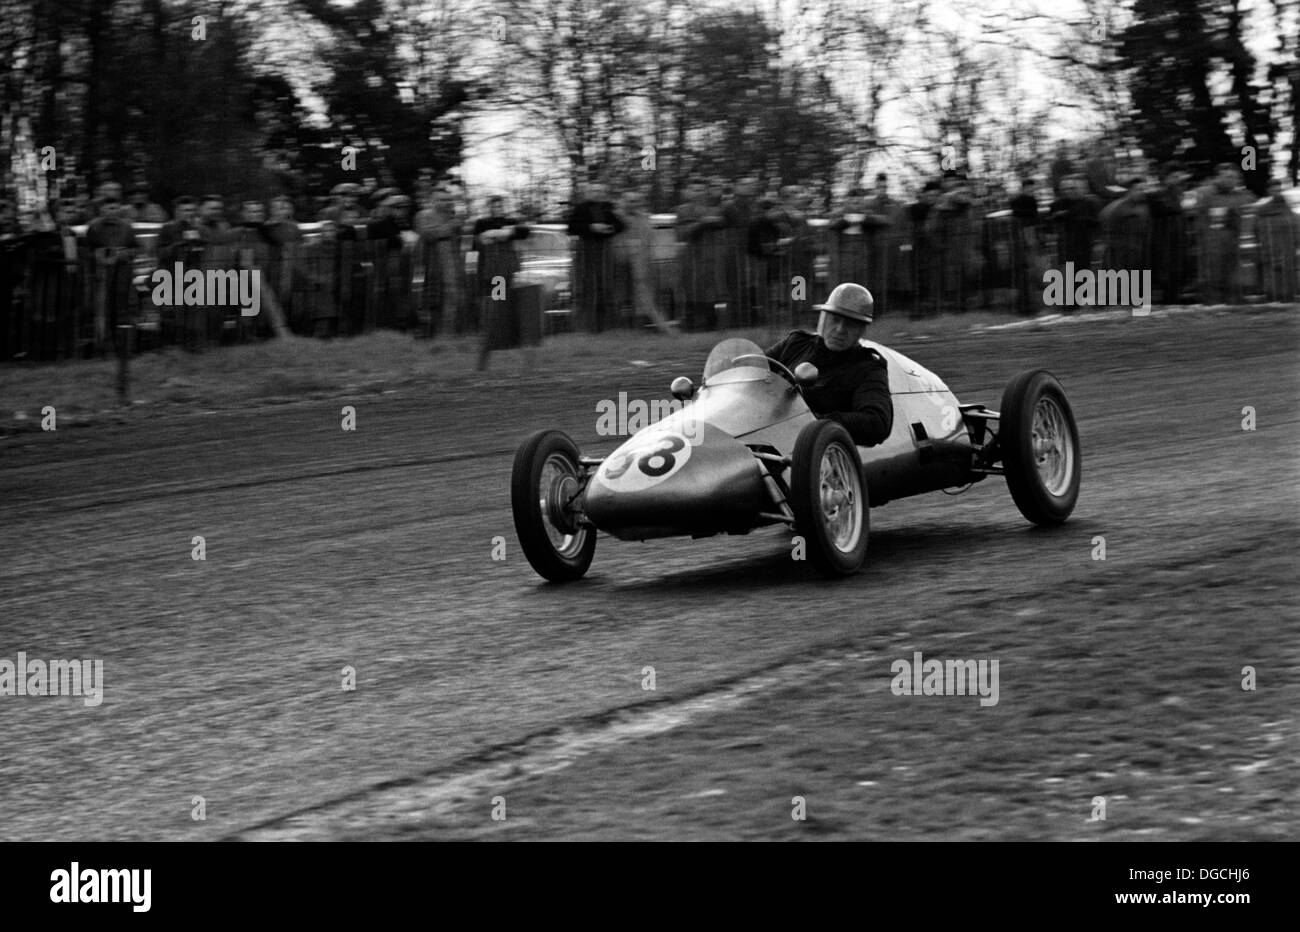 500cc Formula 3 racing at Brands Hatch, England,1950. Stock Photo